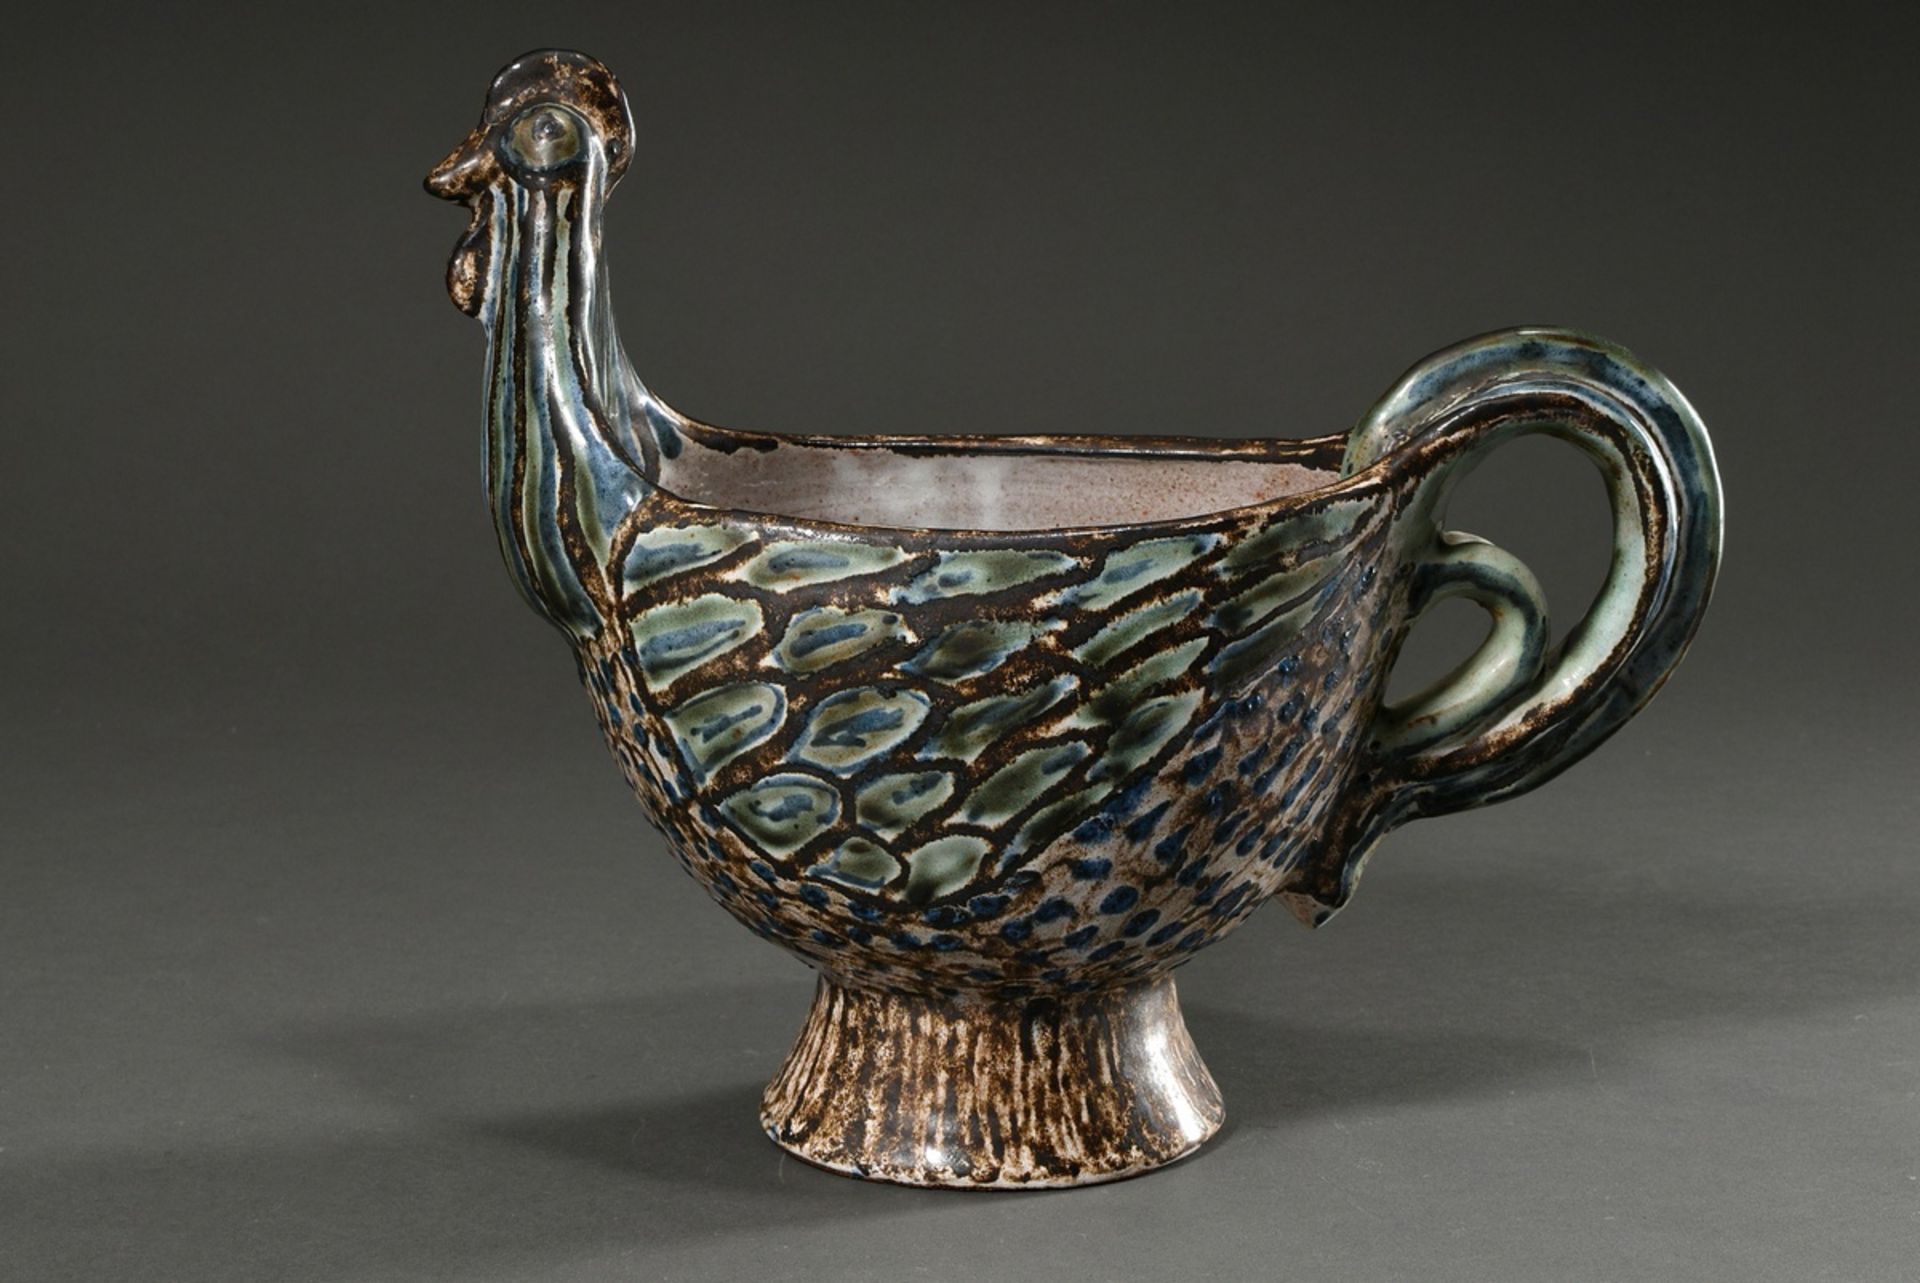 Maetzel, Monika (1917-2010) studio ceramic vessel in animal form "Chicken", ceramic white/green/blu - Image 2 of 6